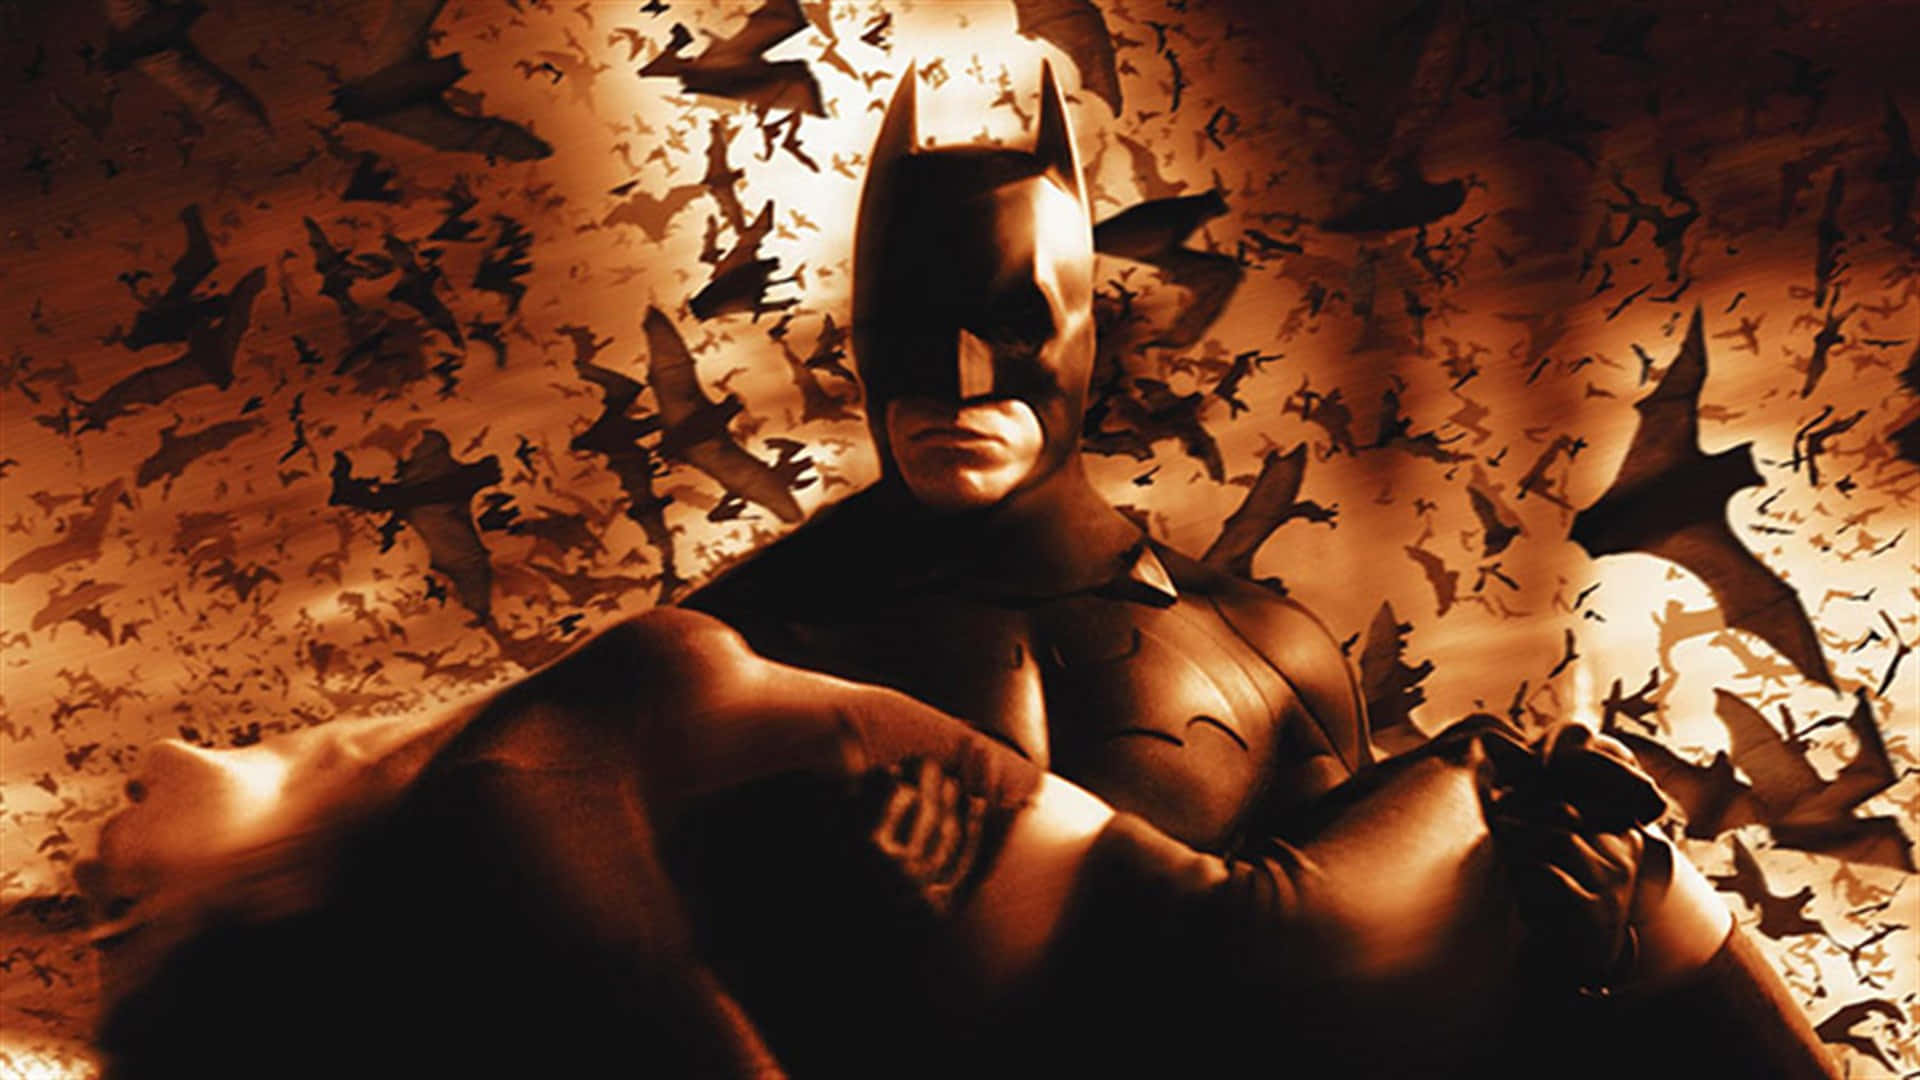 Batman standing tall in a dark and intriguing atmosphere in Batman Begins Wallpaper